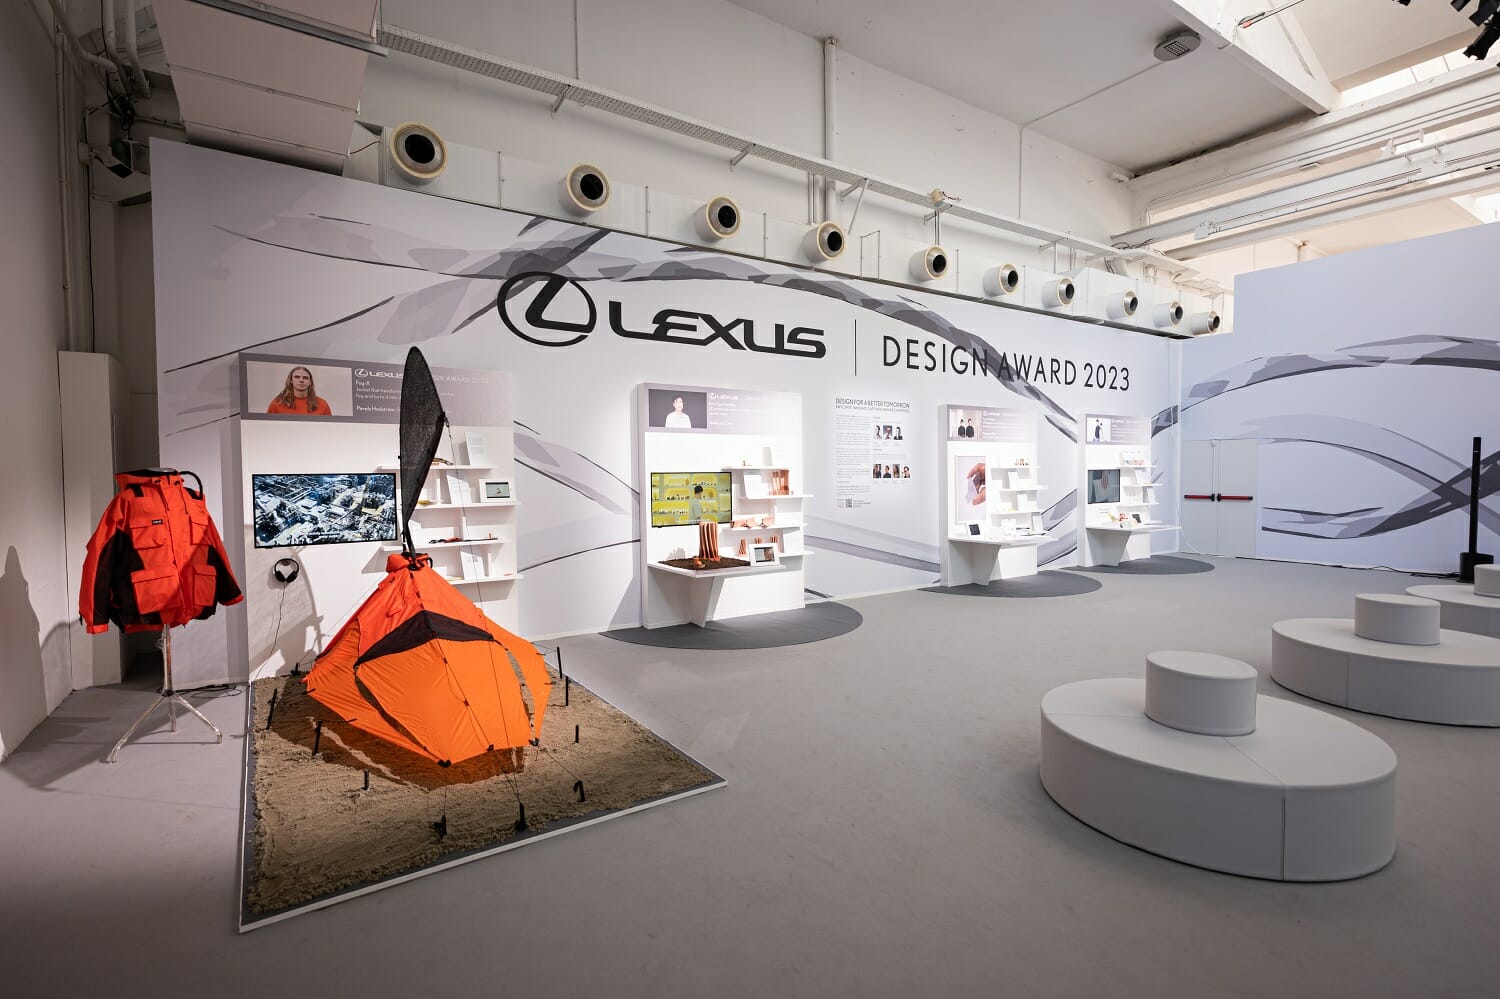 「LEXUS DESIGN AWARD 2023」の受賞者4組のプロトタイプ作品の展示